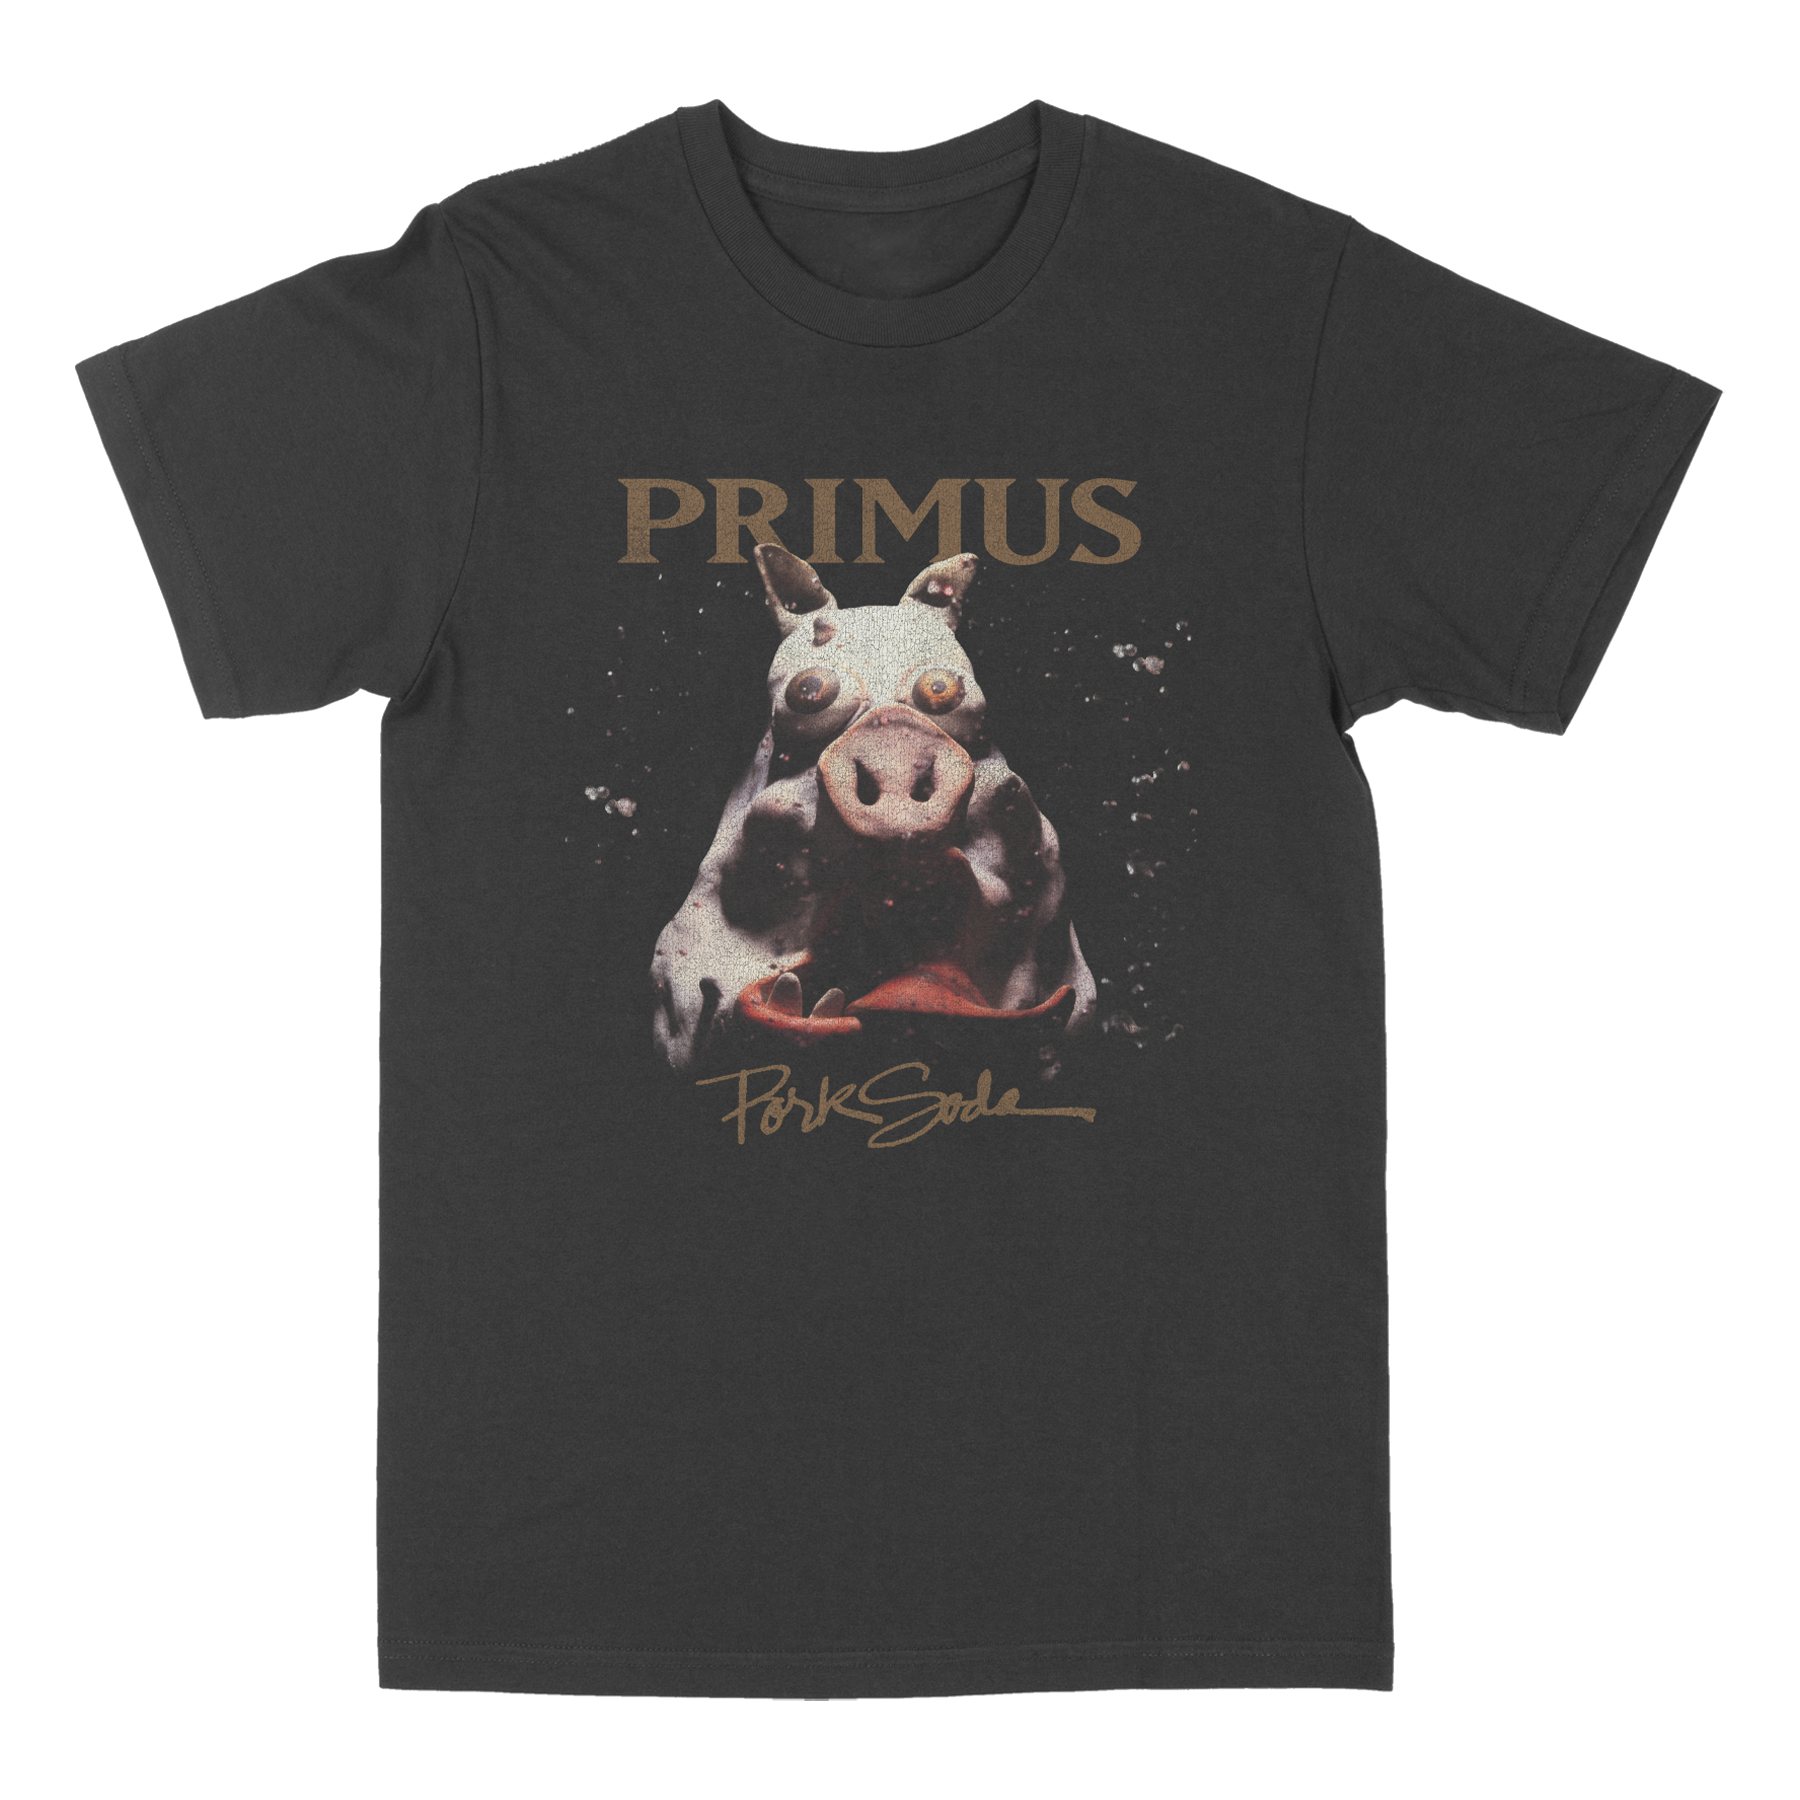 Primus - Pork Soda T-Shirt